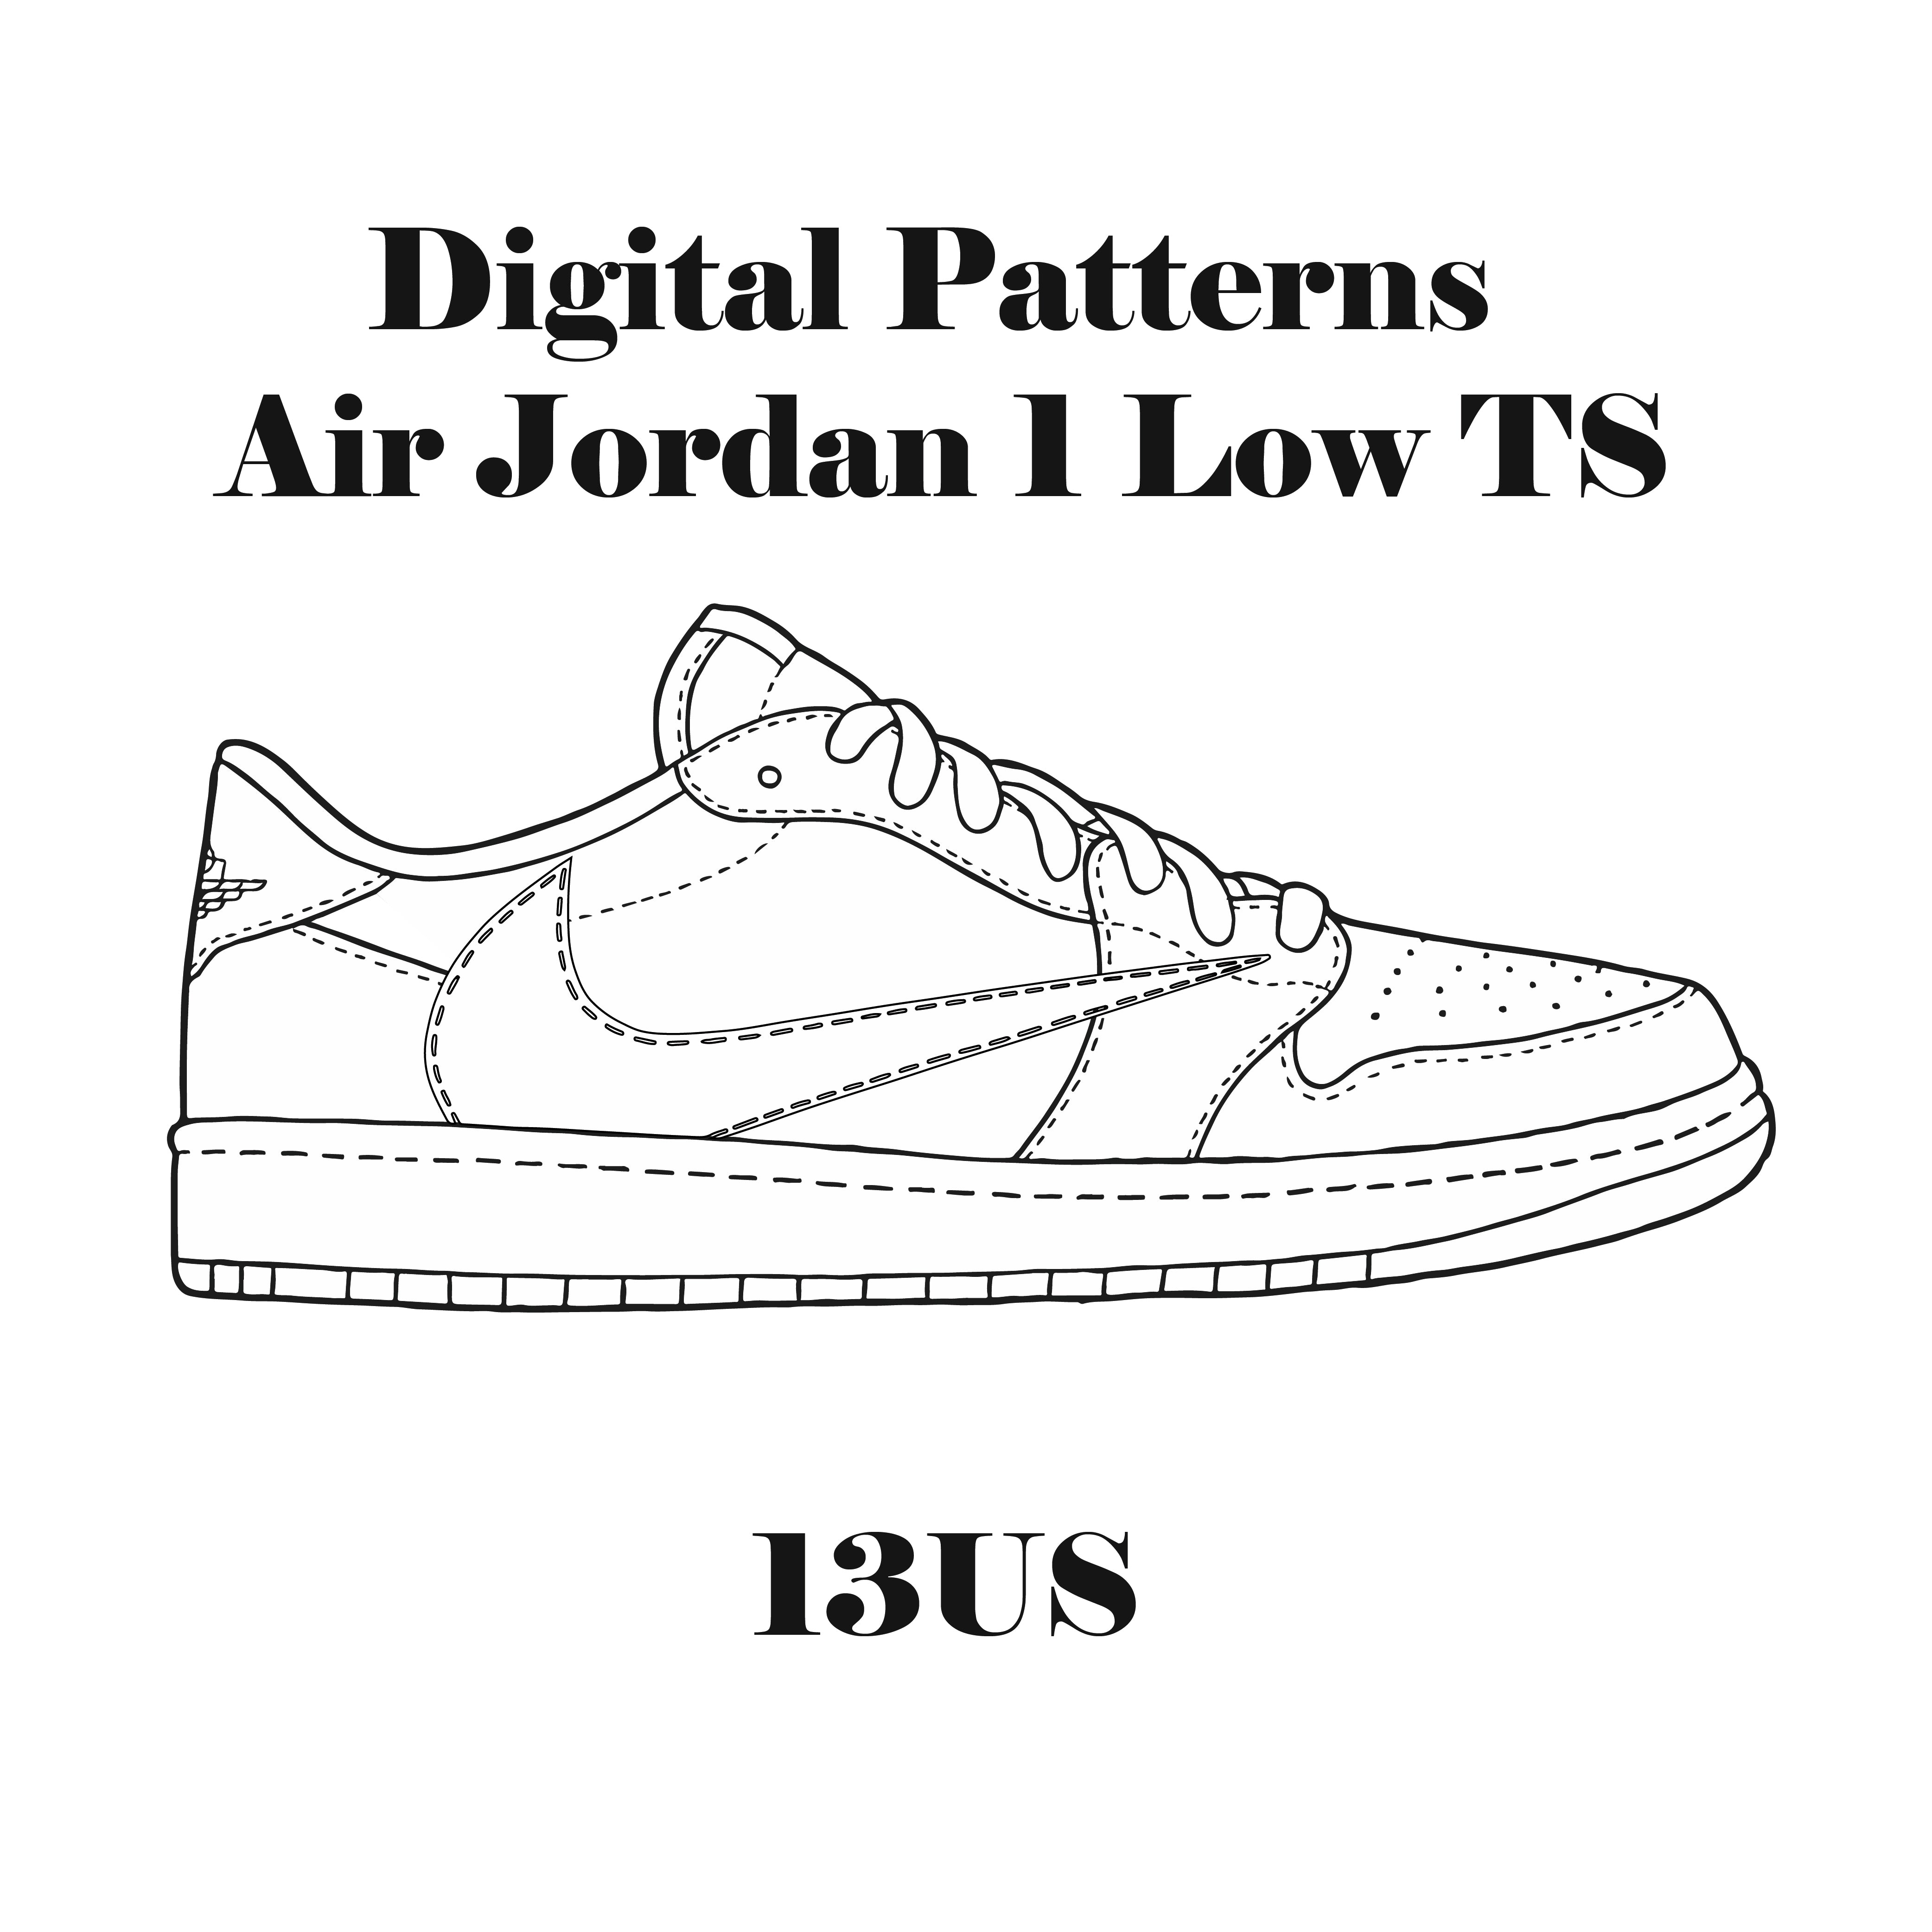 make you an air jordan 1 pattern